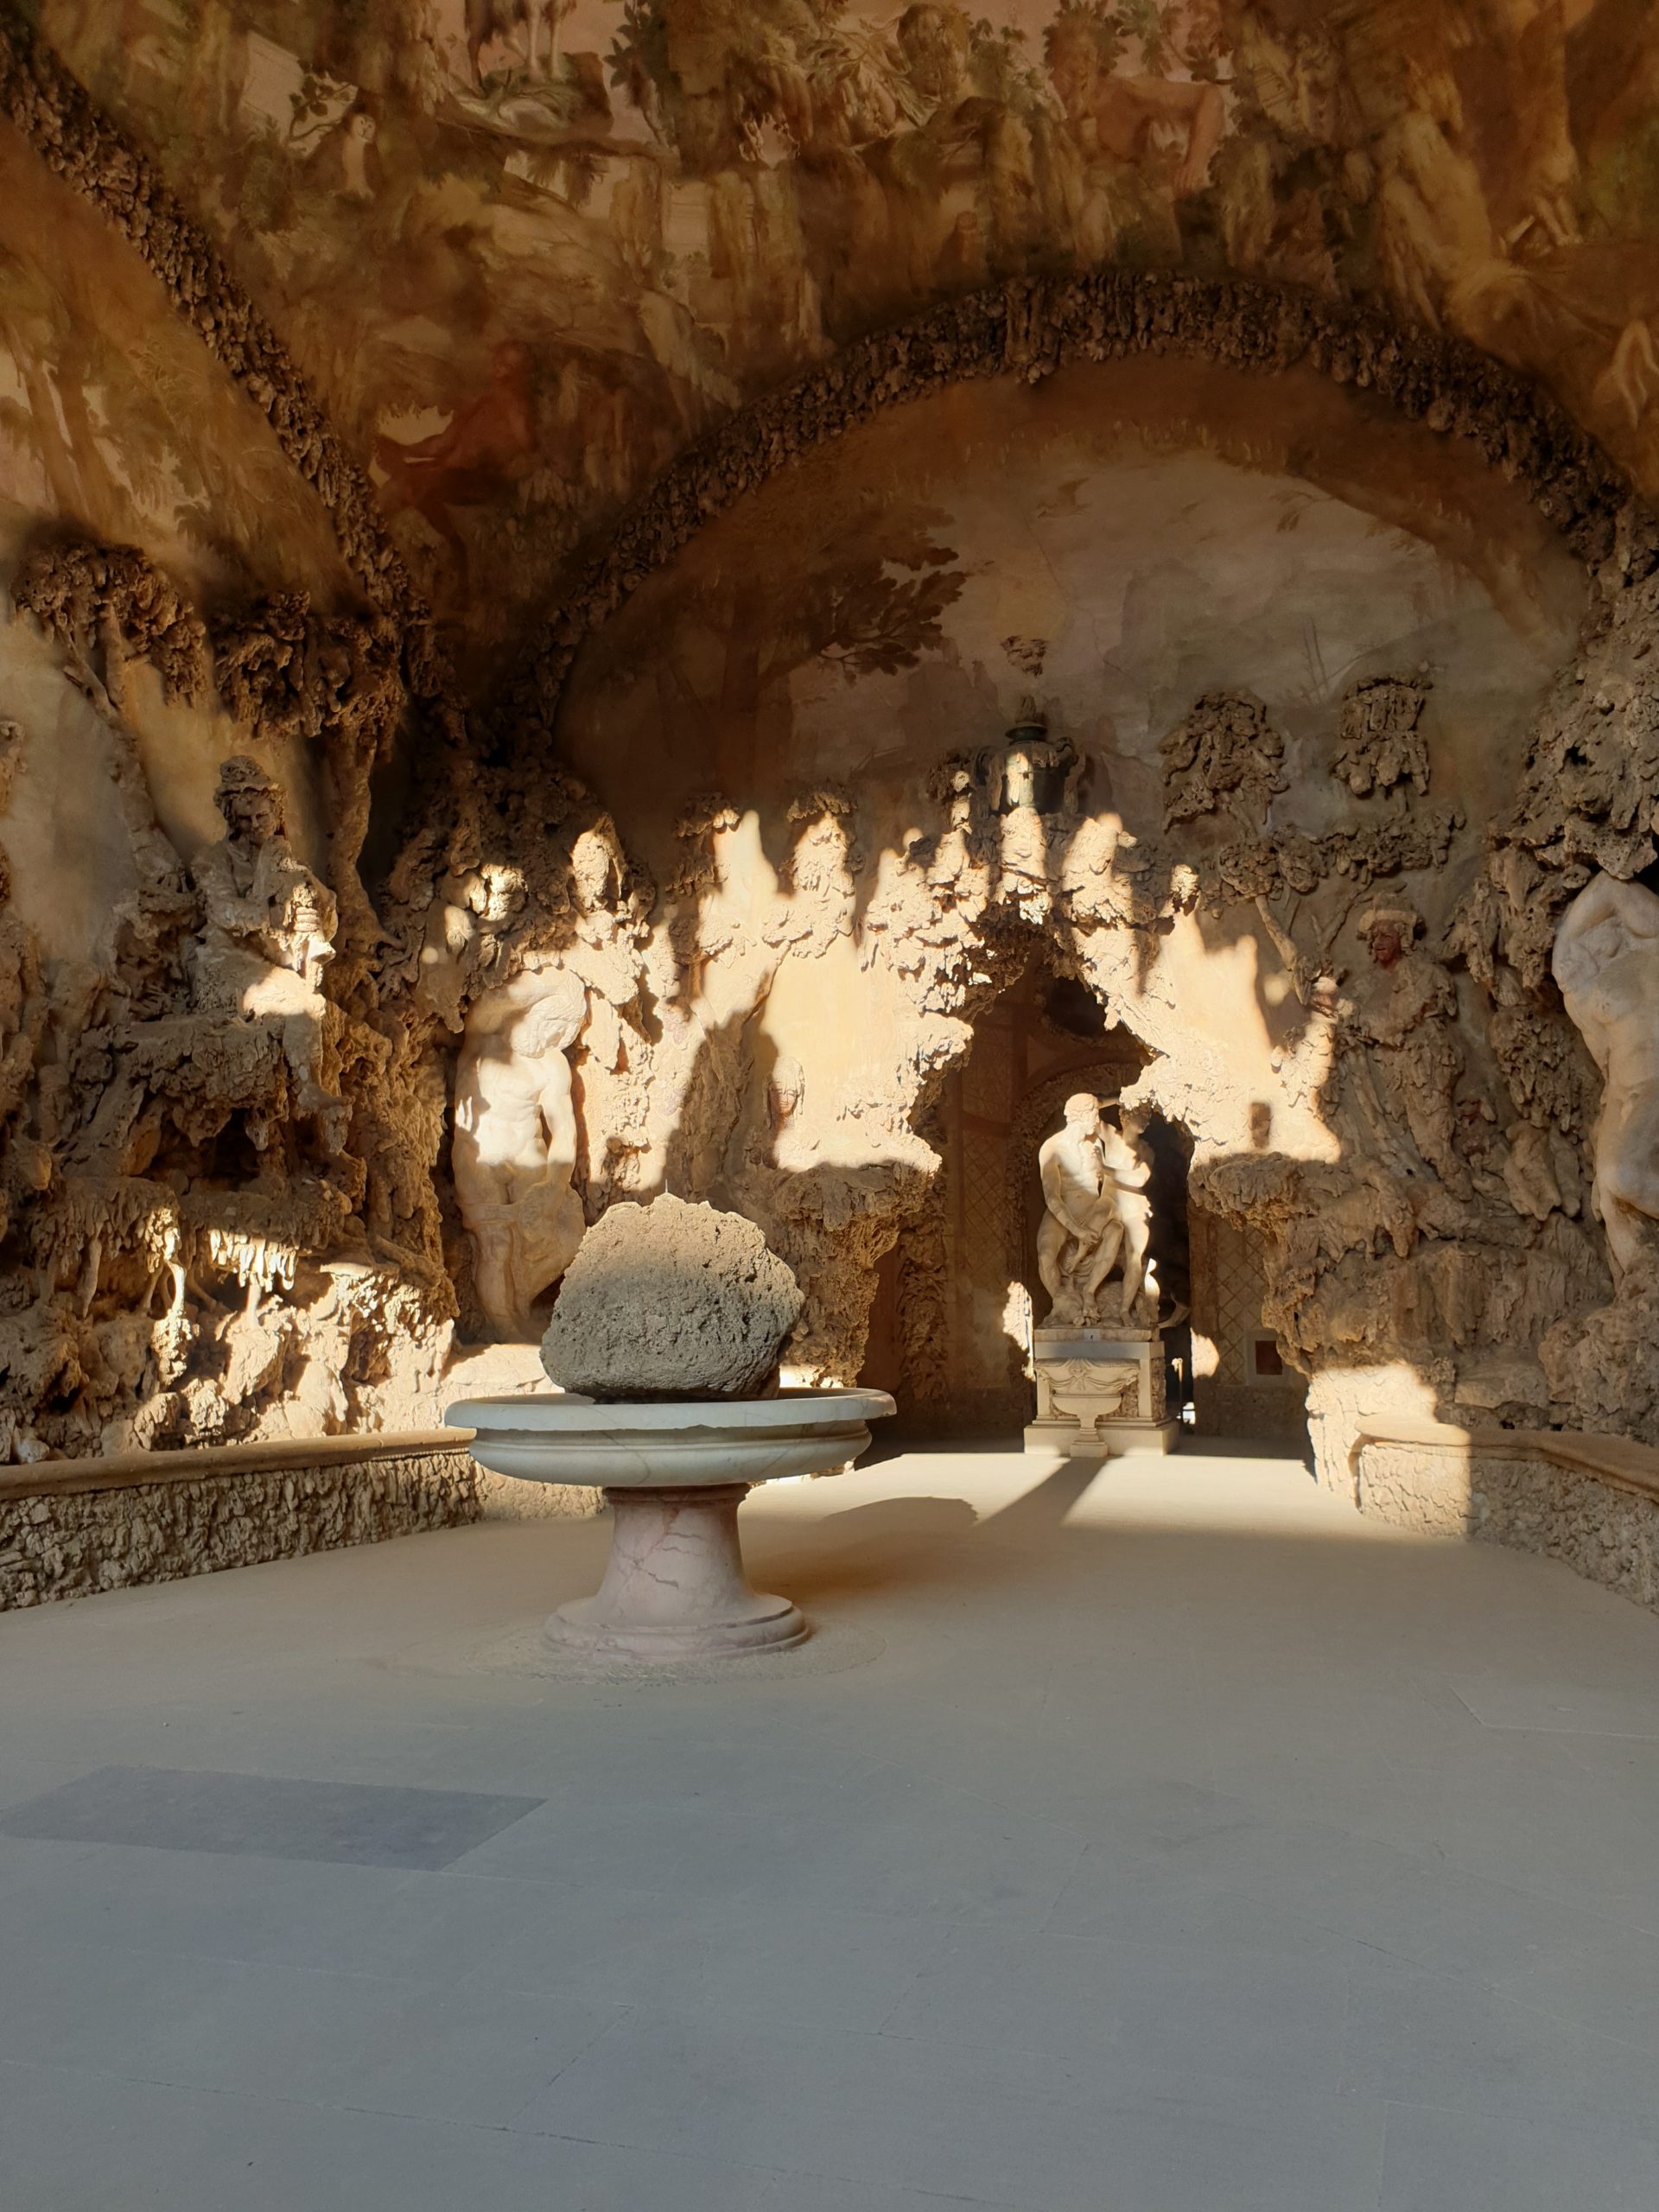 La Grande Grotte du jardin de Boboli, photos prises le 27 octobre 2019